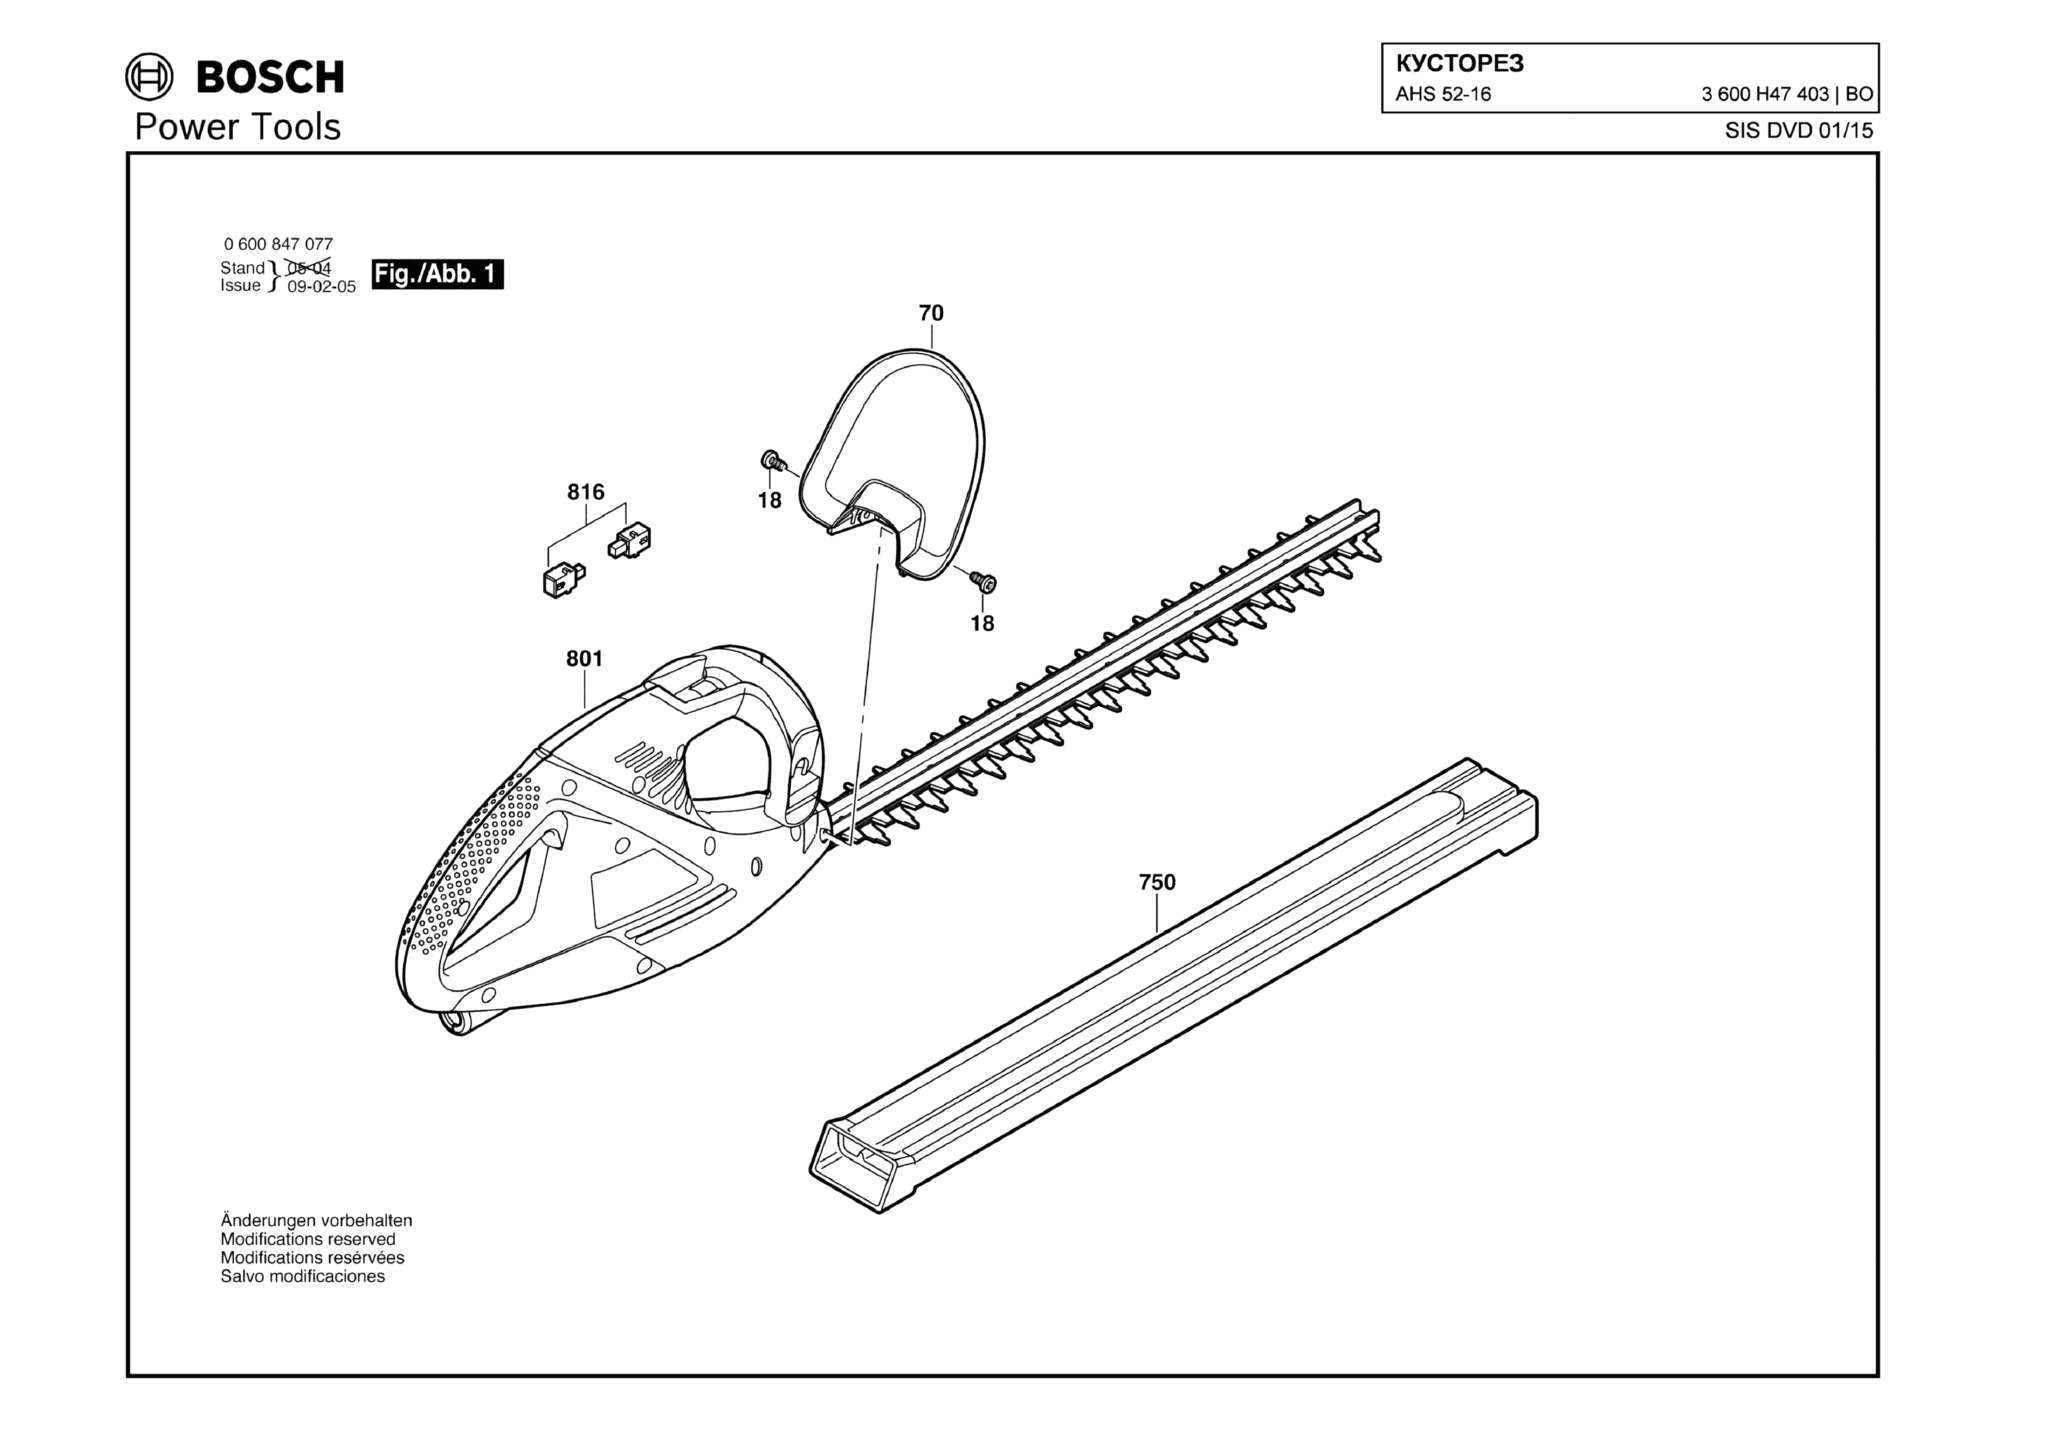 Запчасти, схема и деталировка Bosch AHS 52-16 (ТИП 3600H47403)